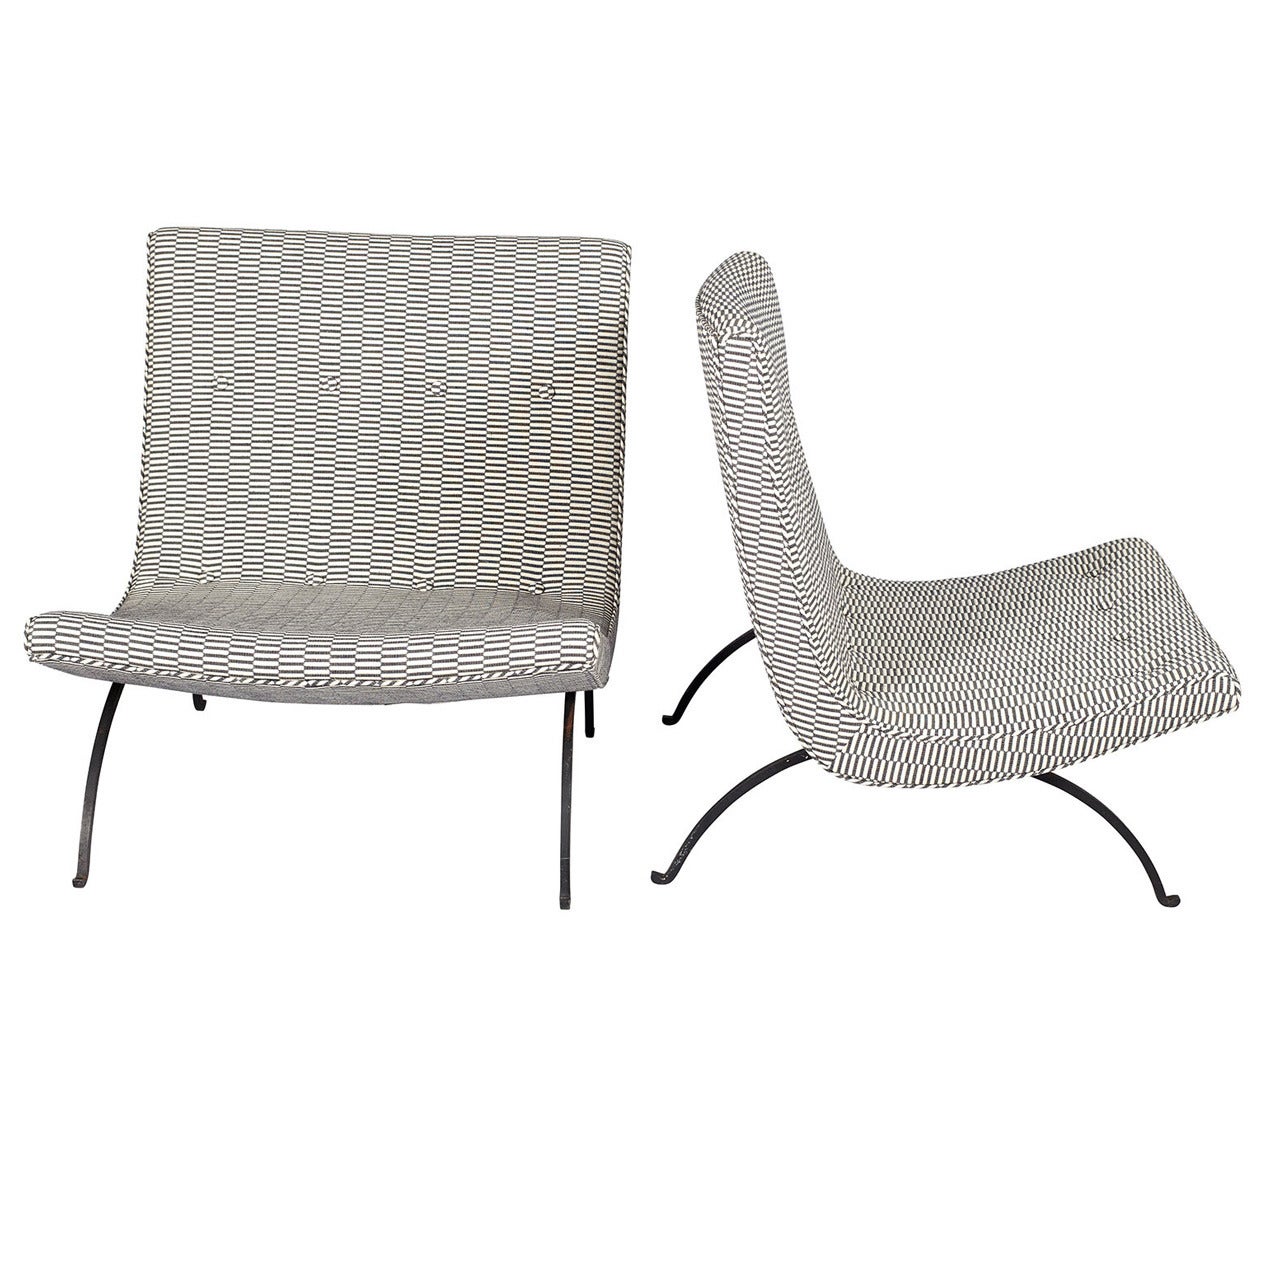 Pair of Milo Baughman Scoop Chairs